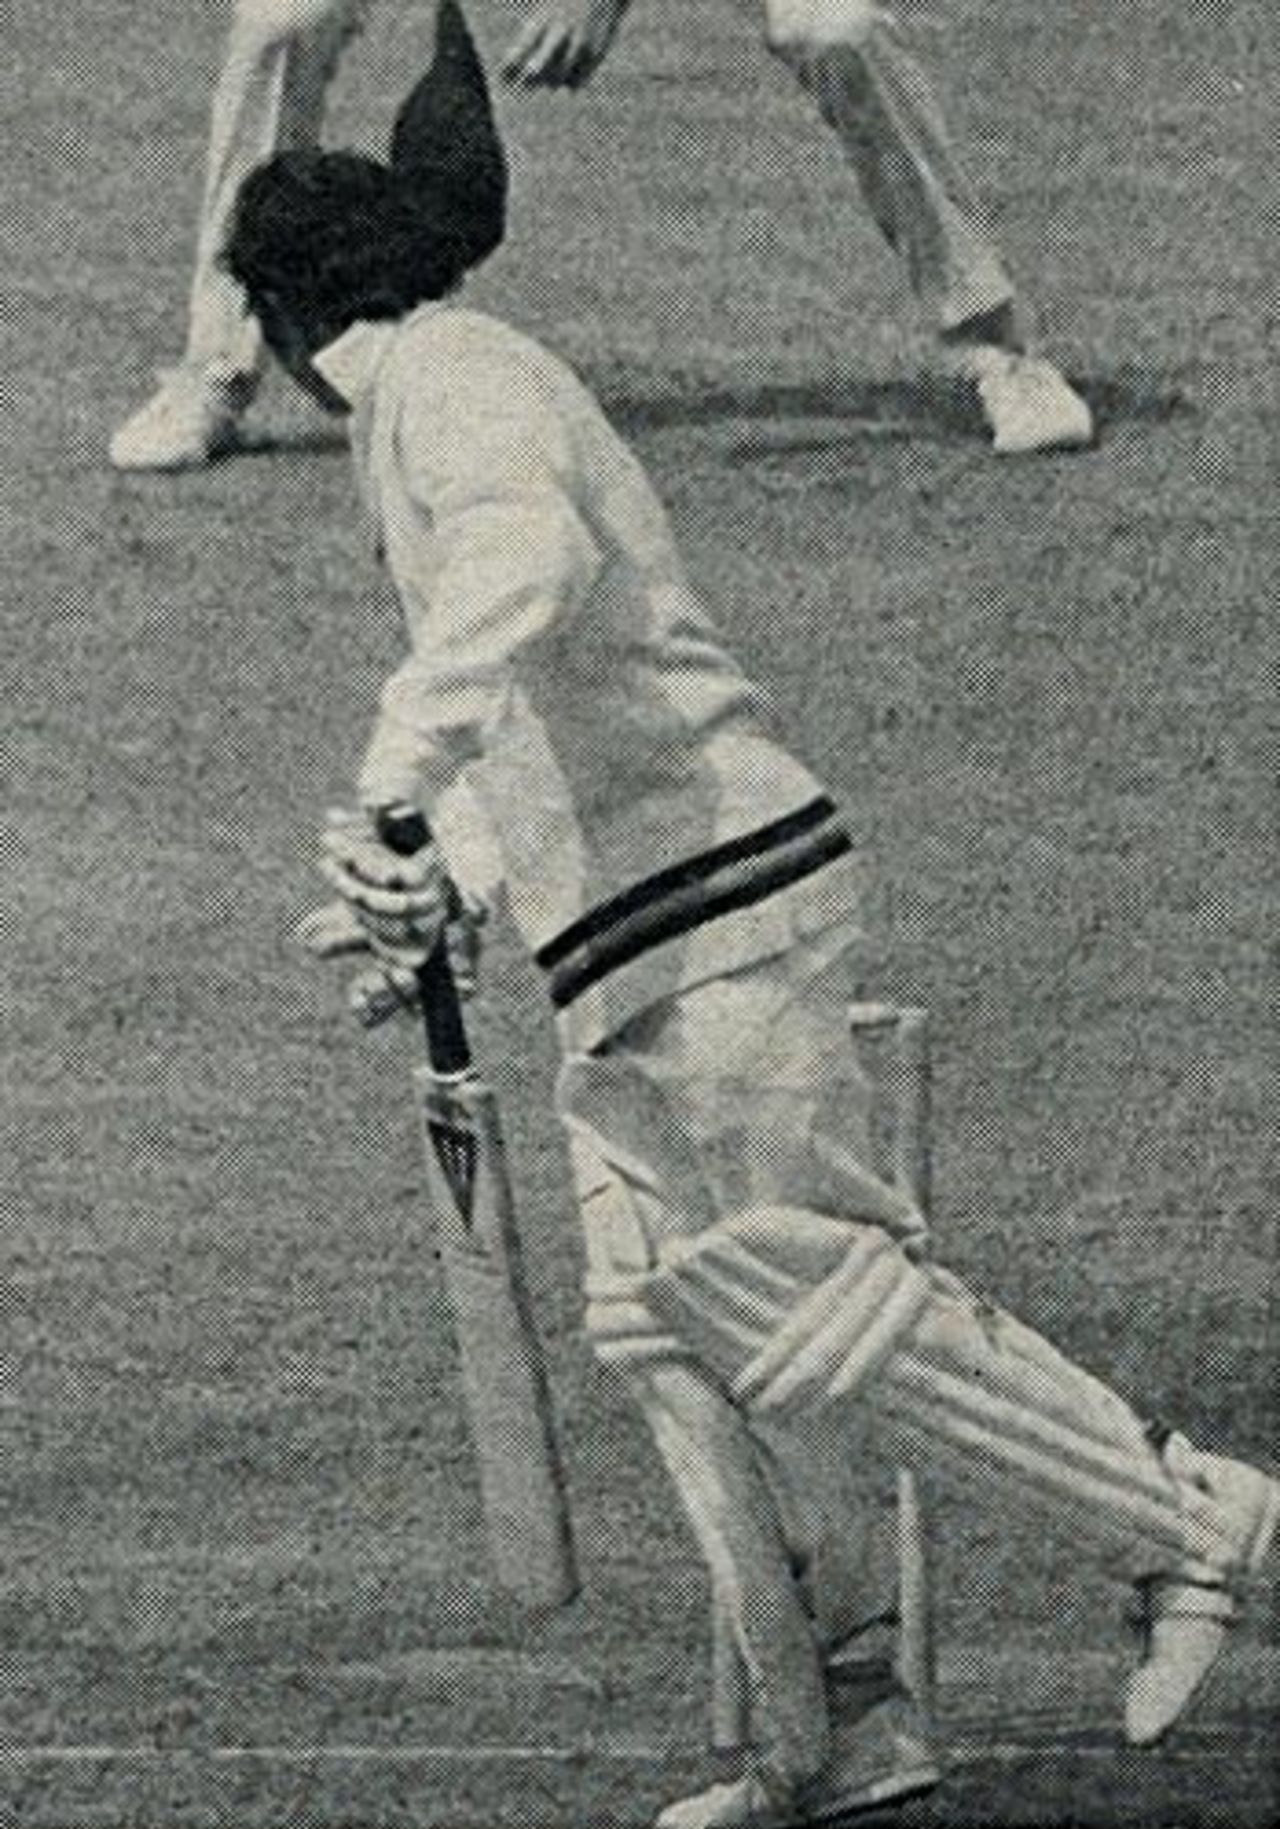 Ashok Mankad's hat falls on his wicket, England v India, 3rd Test, Edgbaston, July 6, 1974